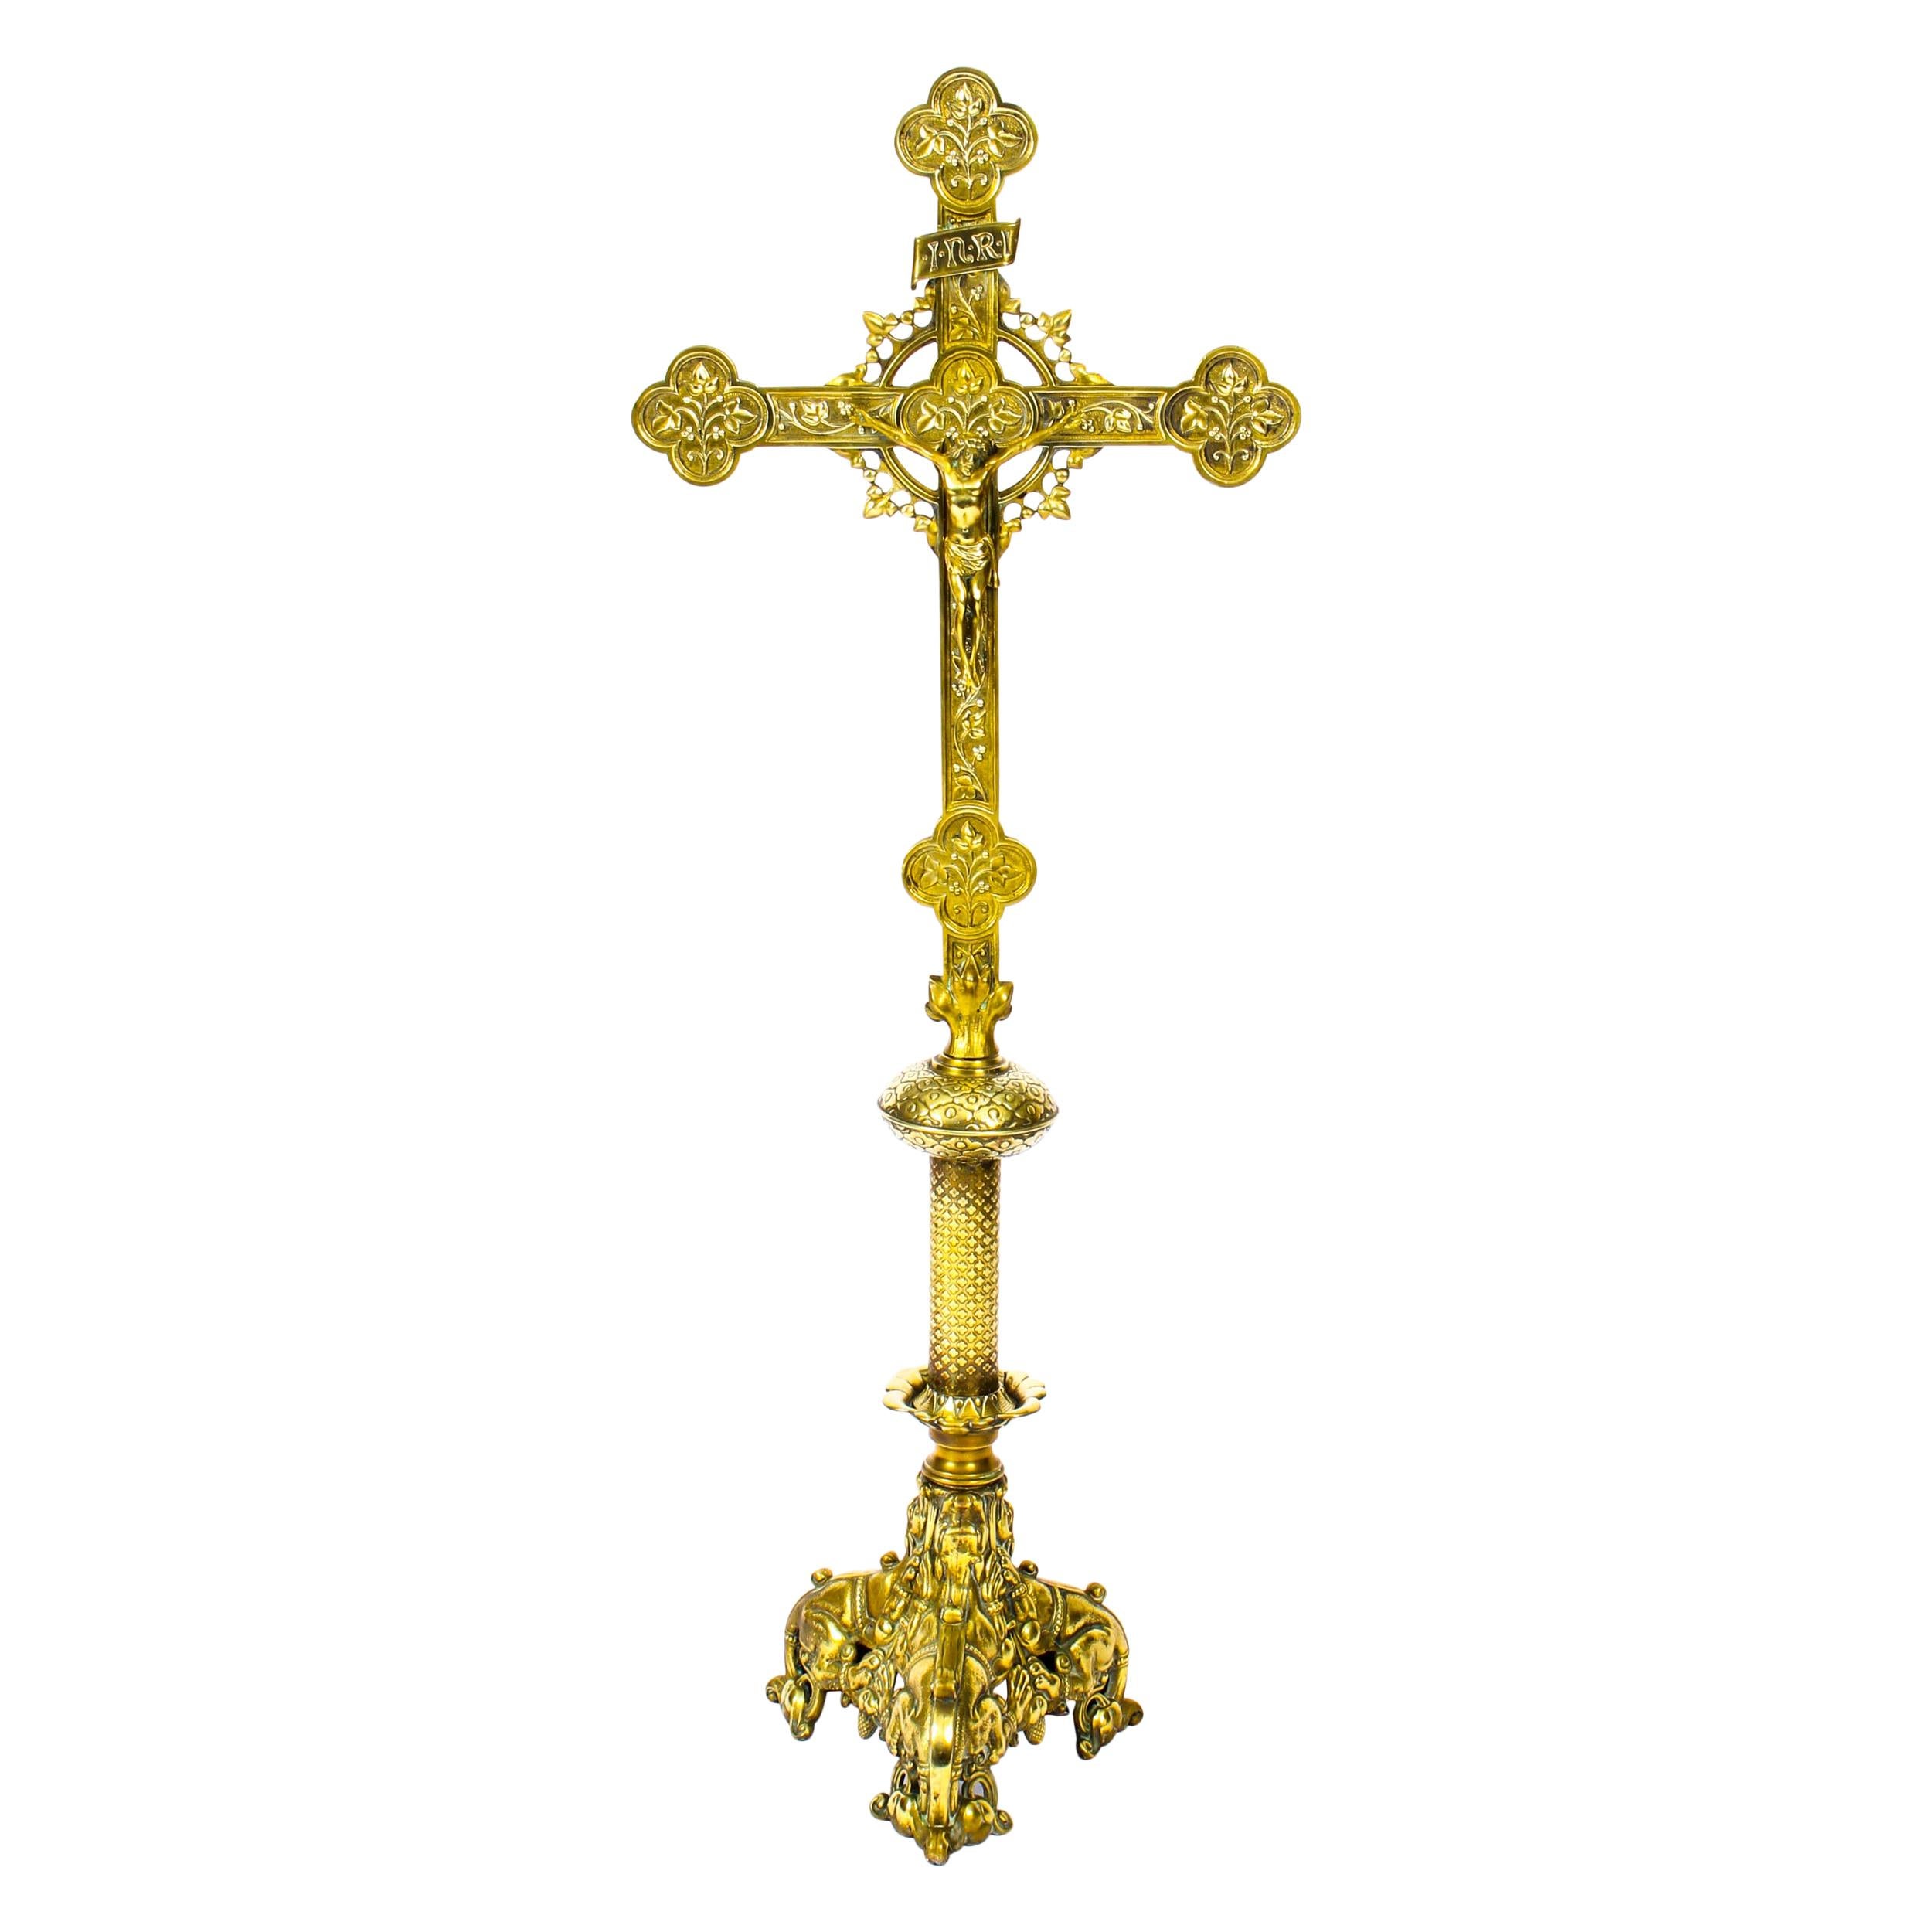 1mt Brass Medieval Revival Altar Corpus Christi Christ Crucified 19th Century